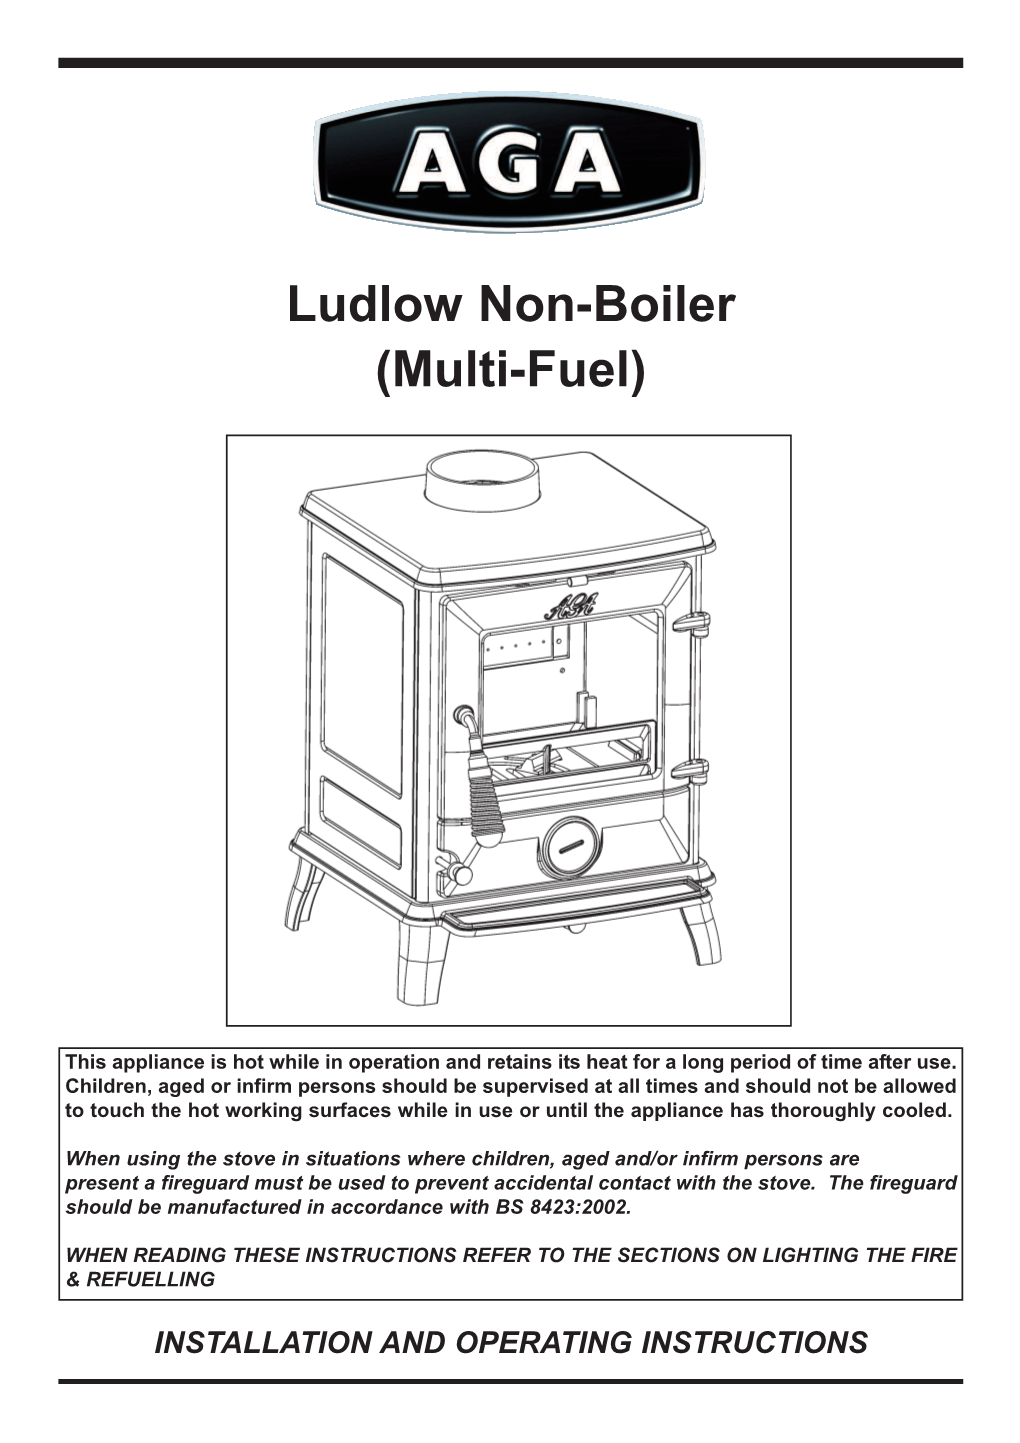 Ludlow Stove Manual